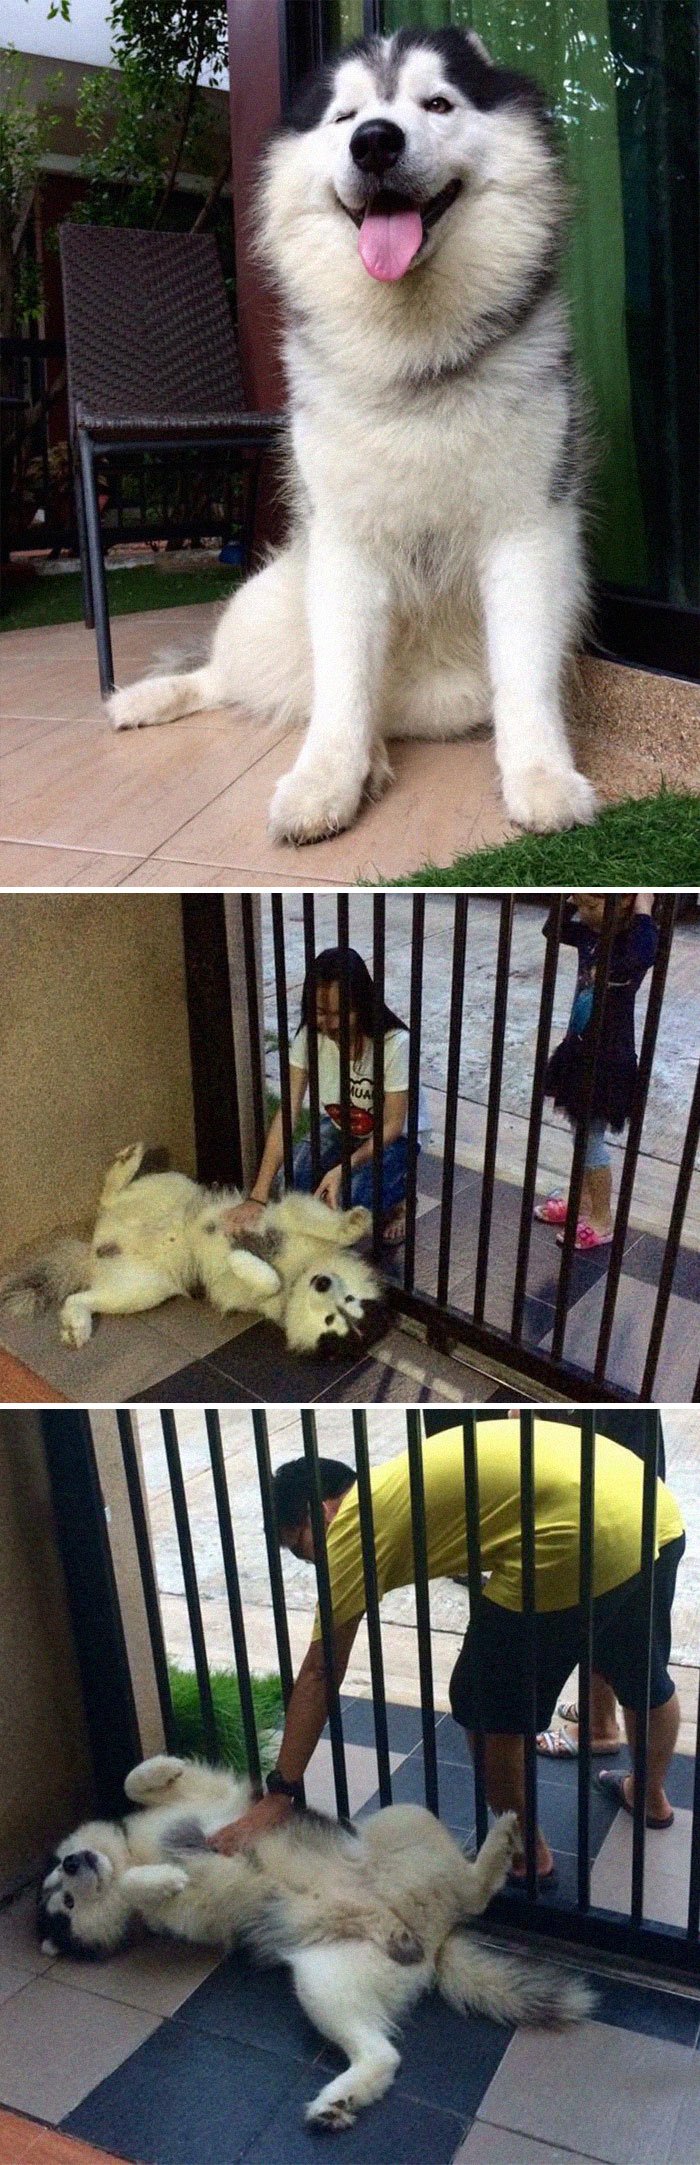 A terrifying guard dog indeed